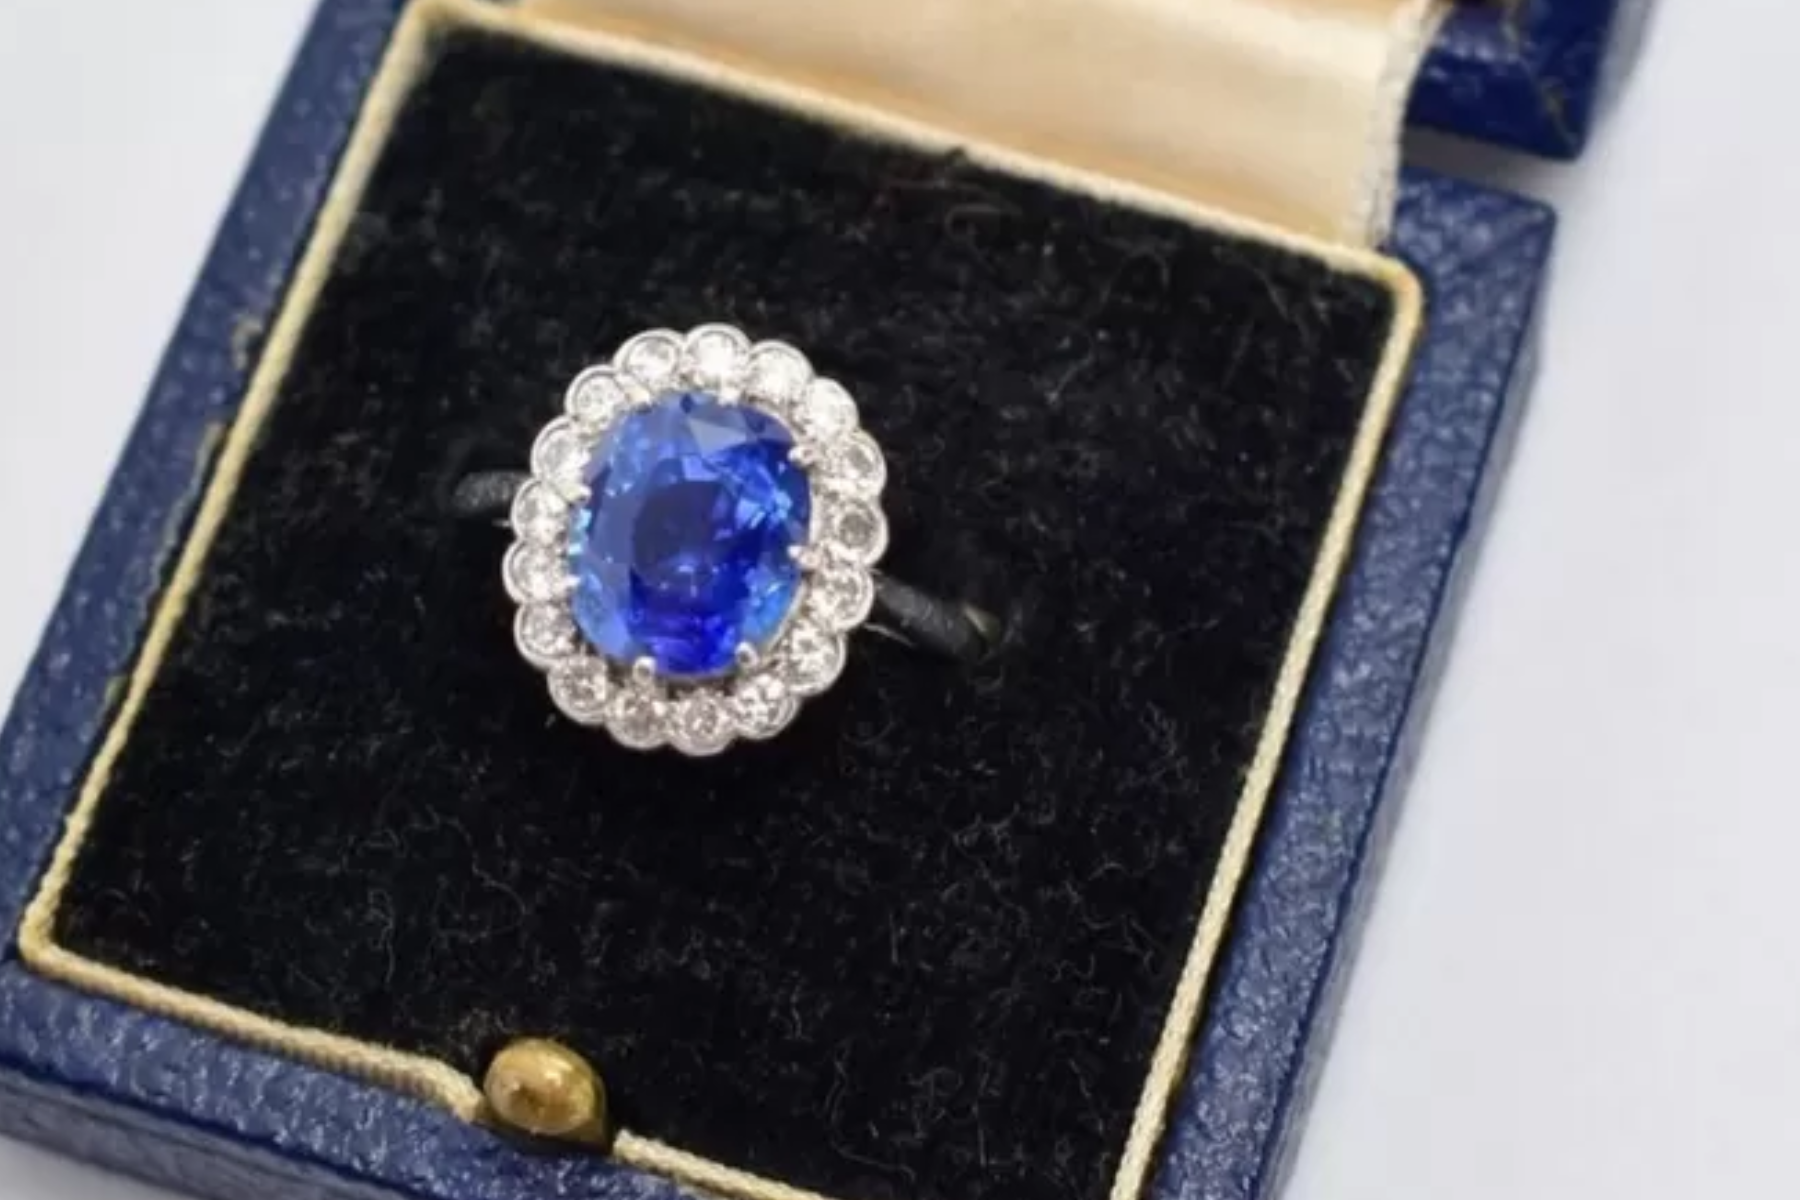 'Hidden Treasure' Sapphire Ring Sells For £11k